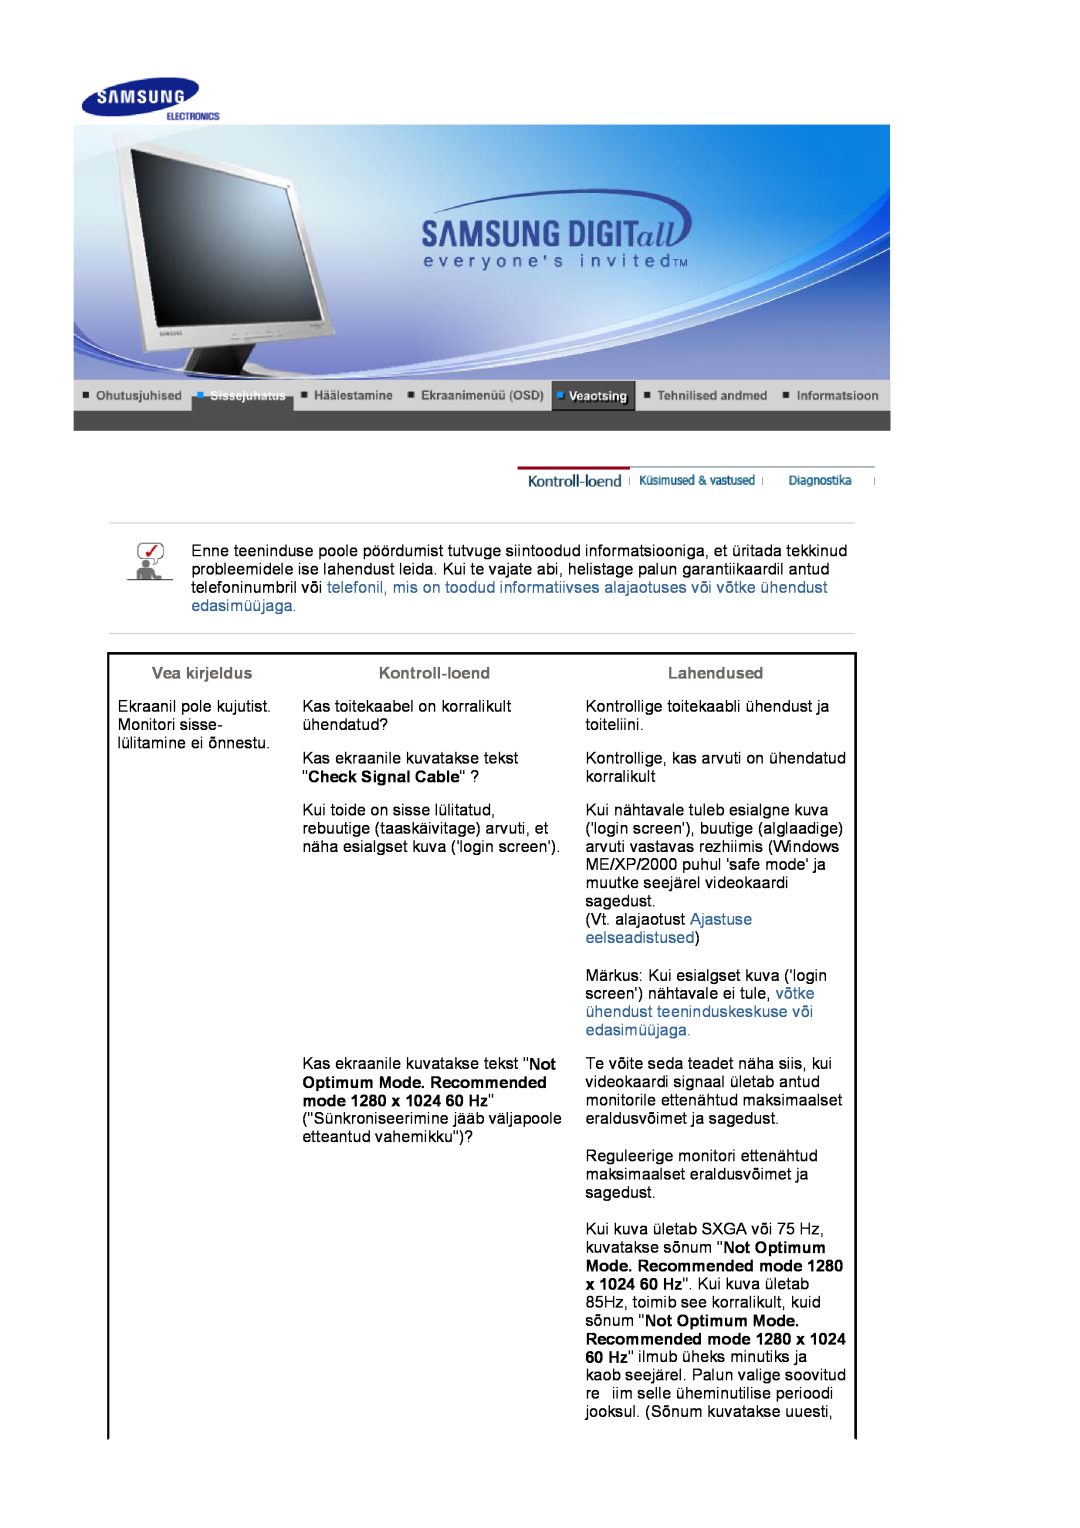 Samsung LS17MJVKS/EDC manual Check Signal Cable ?, Recommended mode 1280 x, Vea kirjeldus, Kontroll-loend, Lahendused 